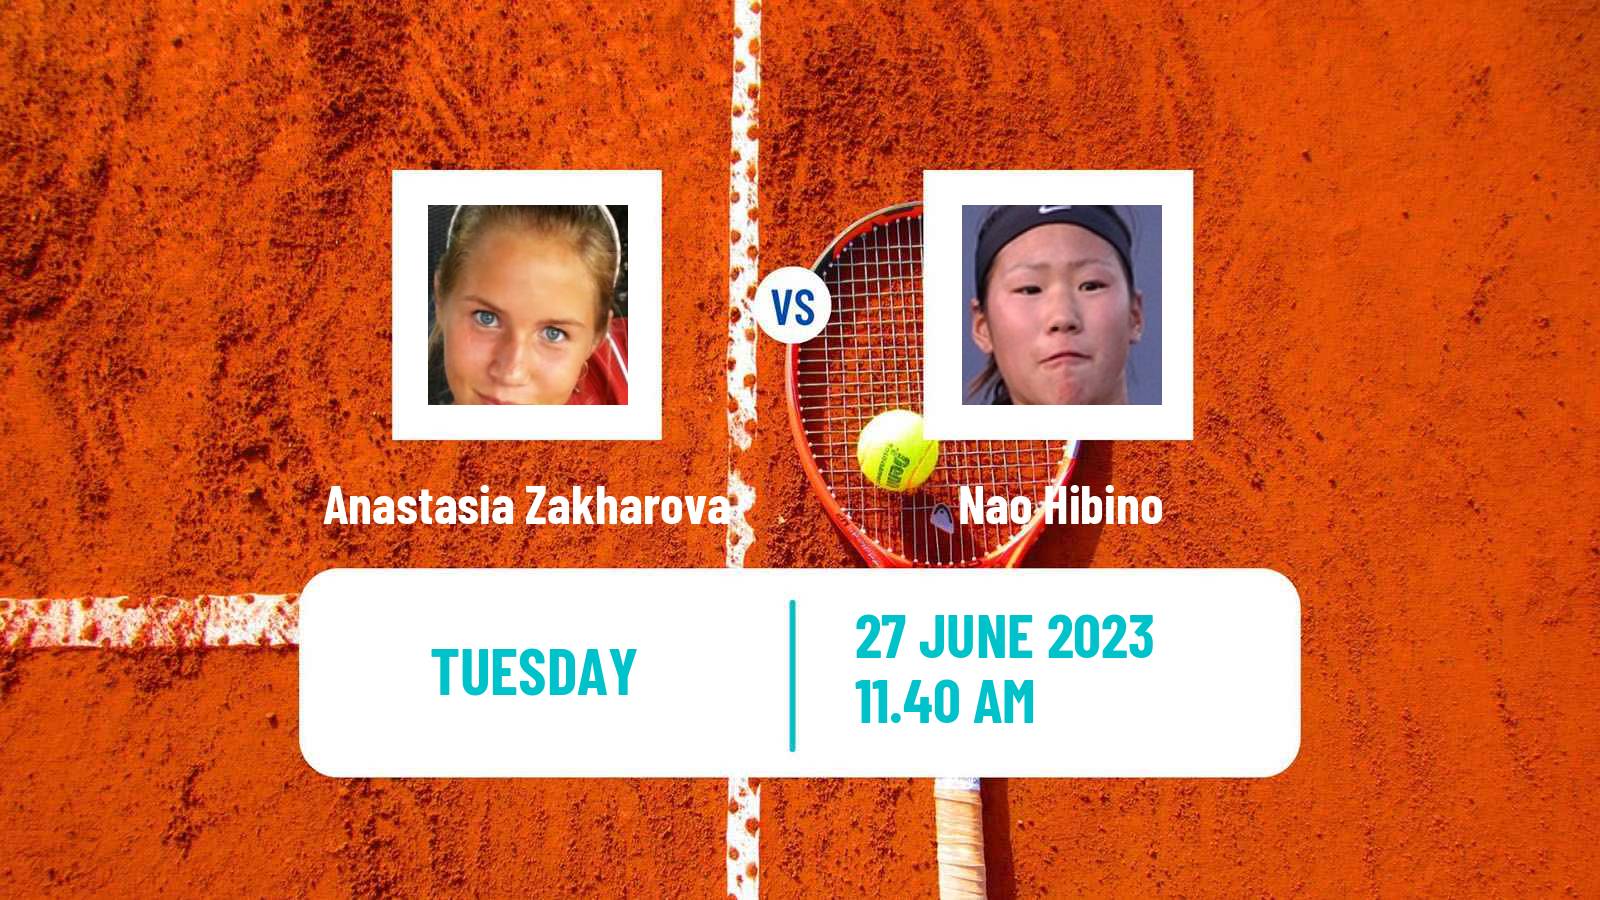 Tennis WTA Wimbledon Anastasia Zakharova - Nao Hibino